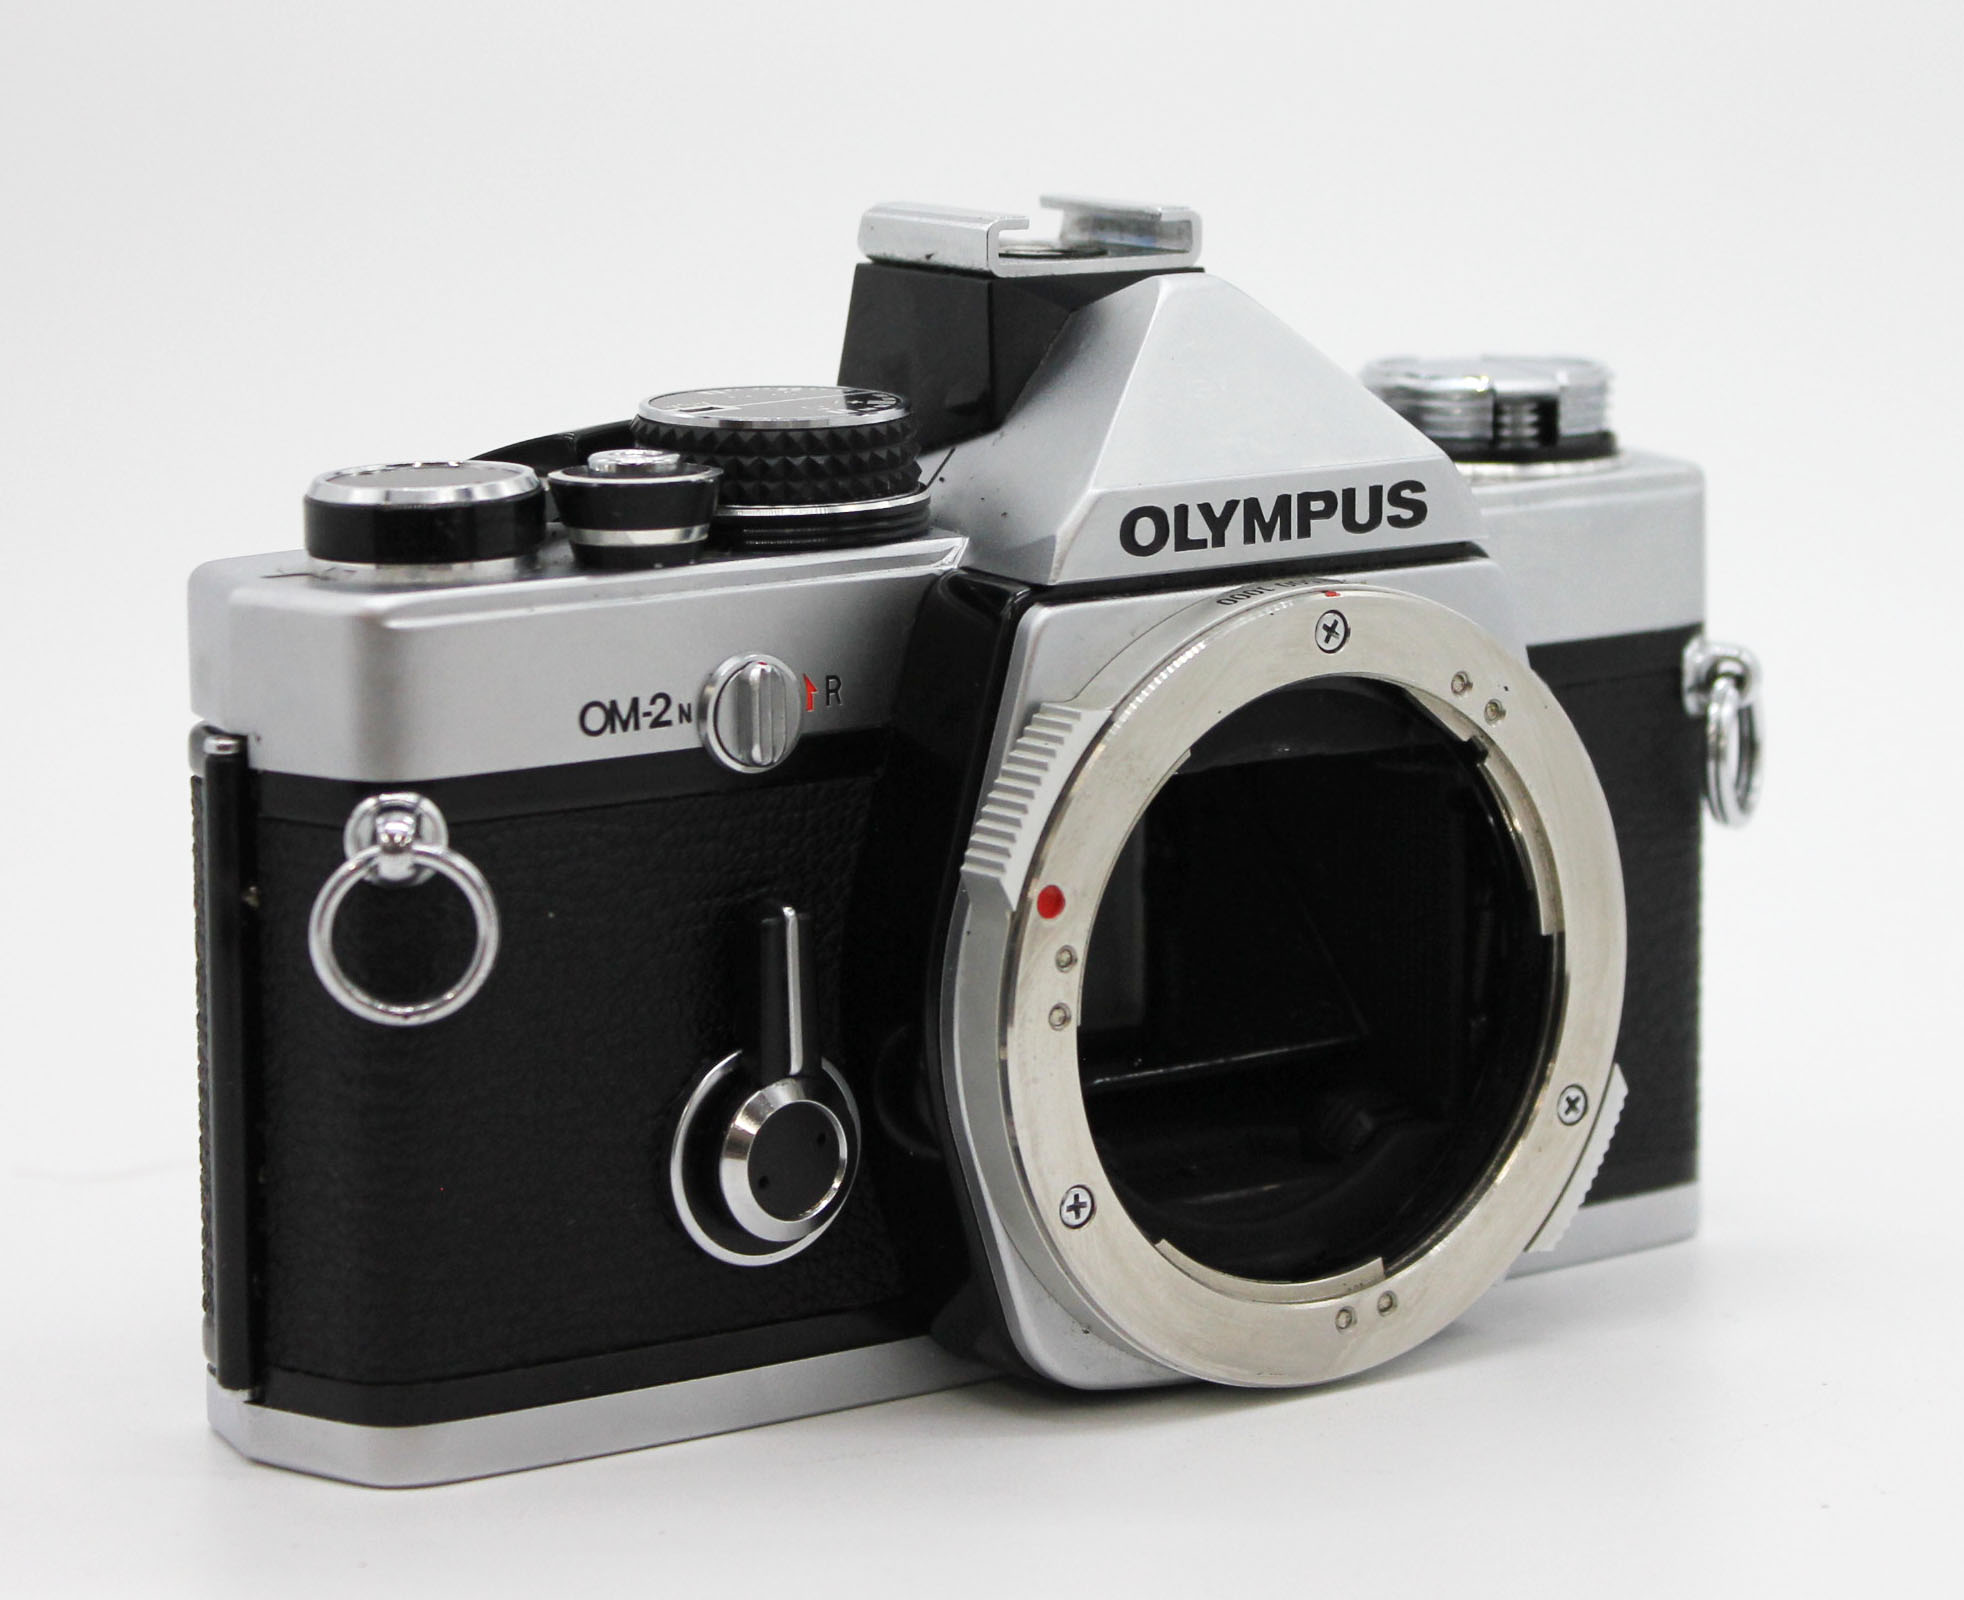 Olympus OM-2N 35mm SLR Film Camera with Macro 50mm F/3.5 Lens, Winder & Flash from Japan Photo 2